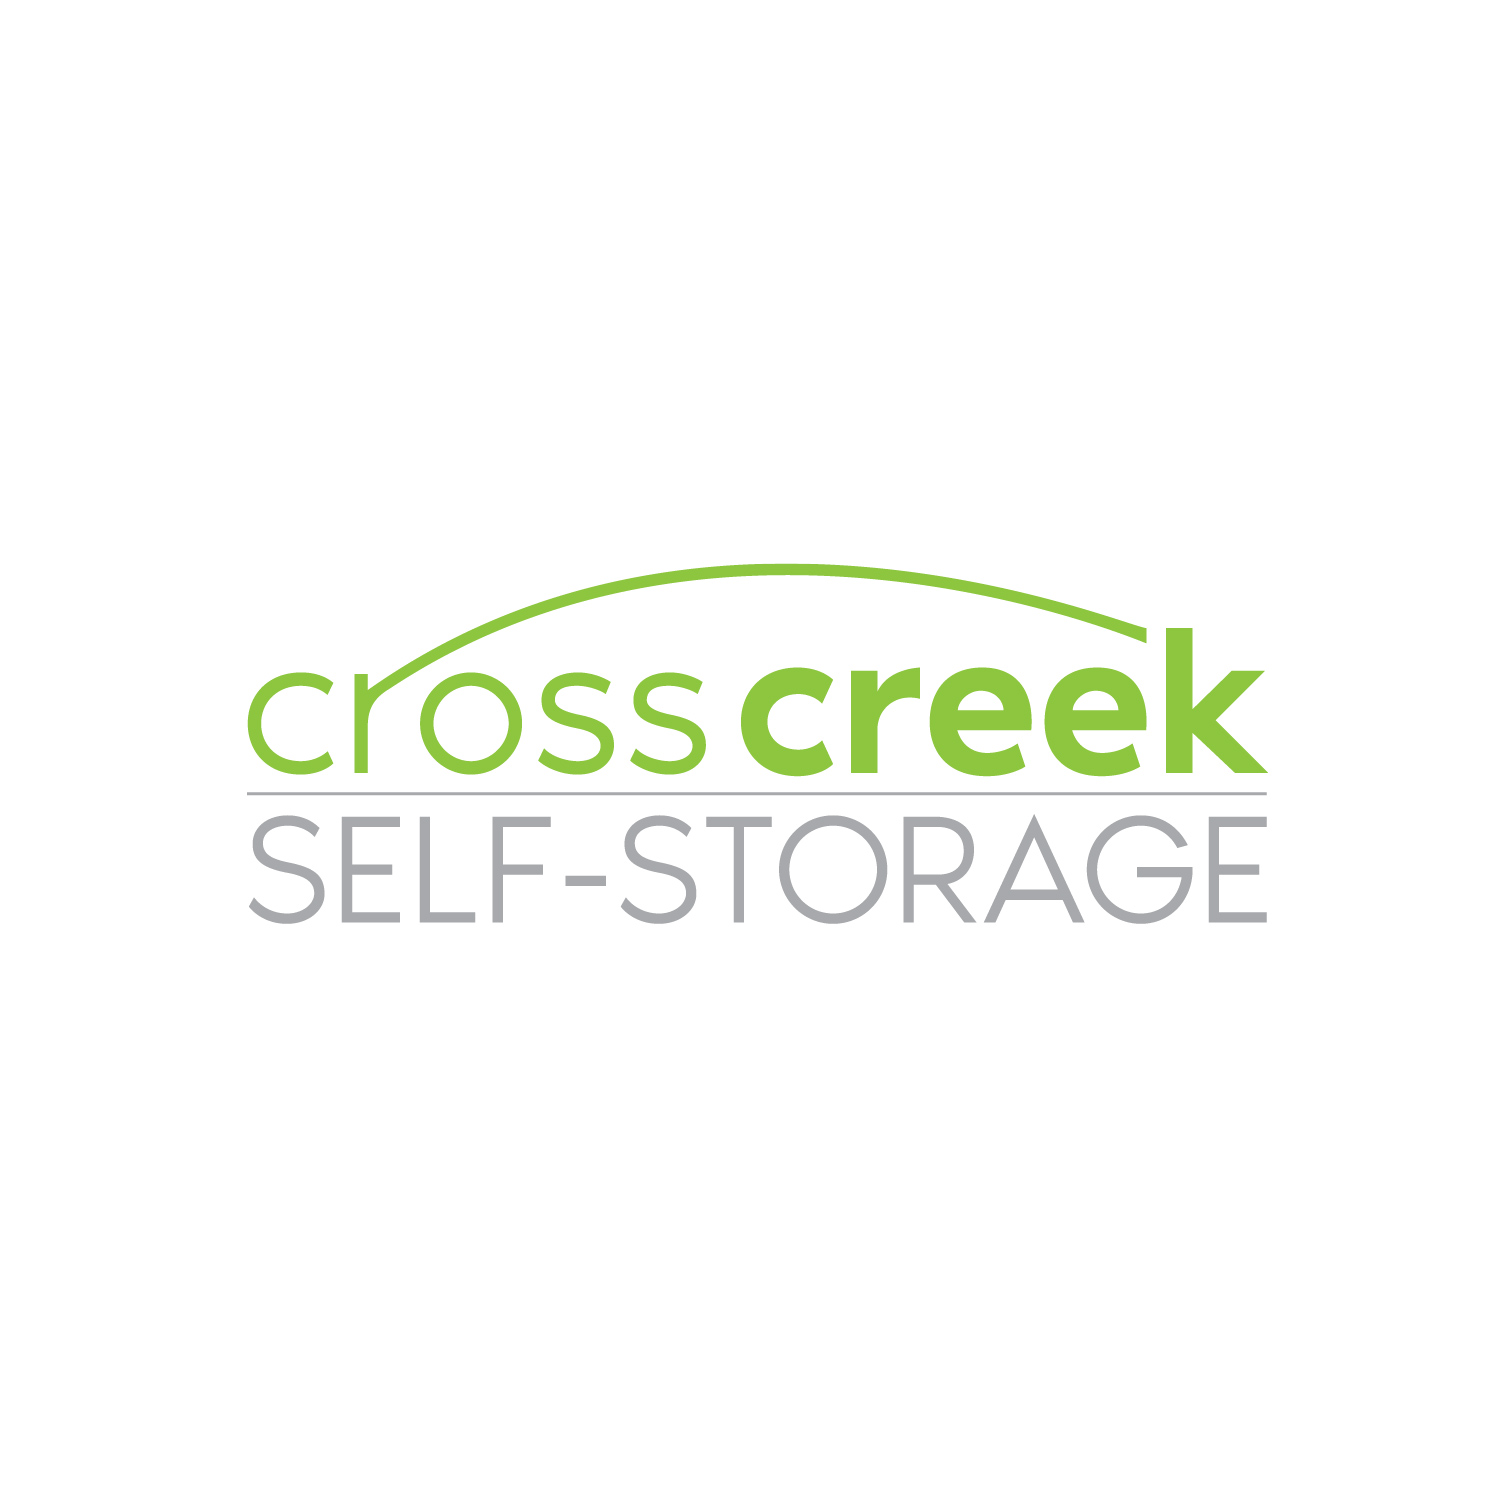 Cross Creek Self Storage